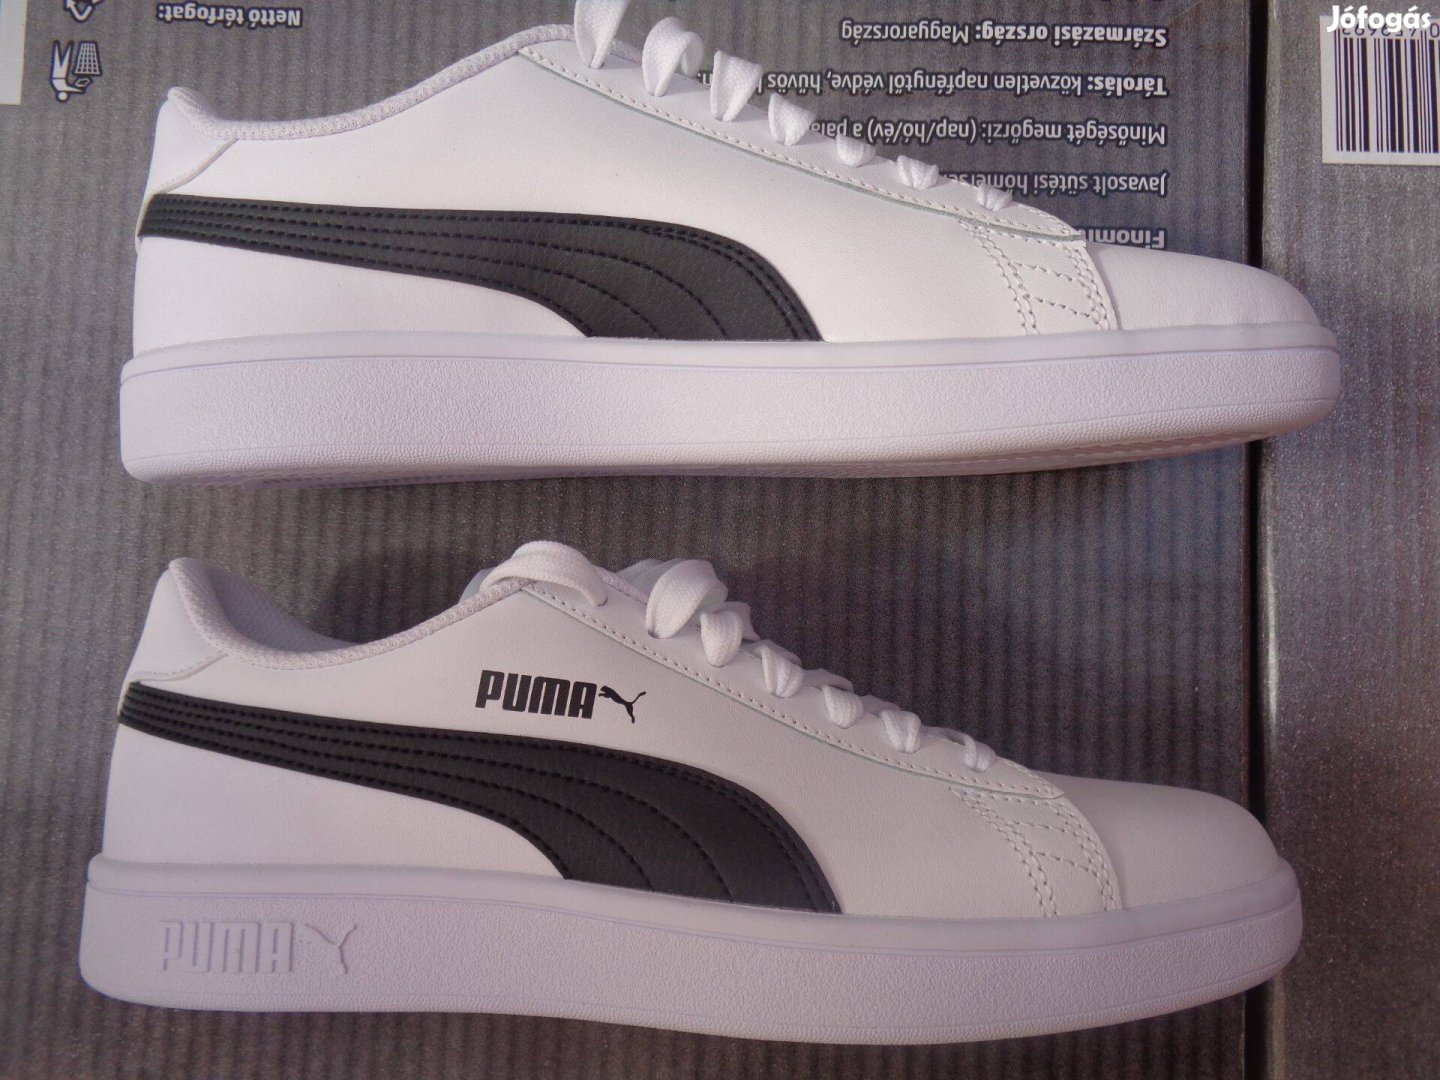 Új eredeti Puma Puma Smash v2 L 41-es 41 férfi bőr sportcipő cipő 2 db